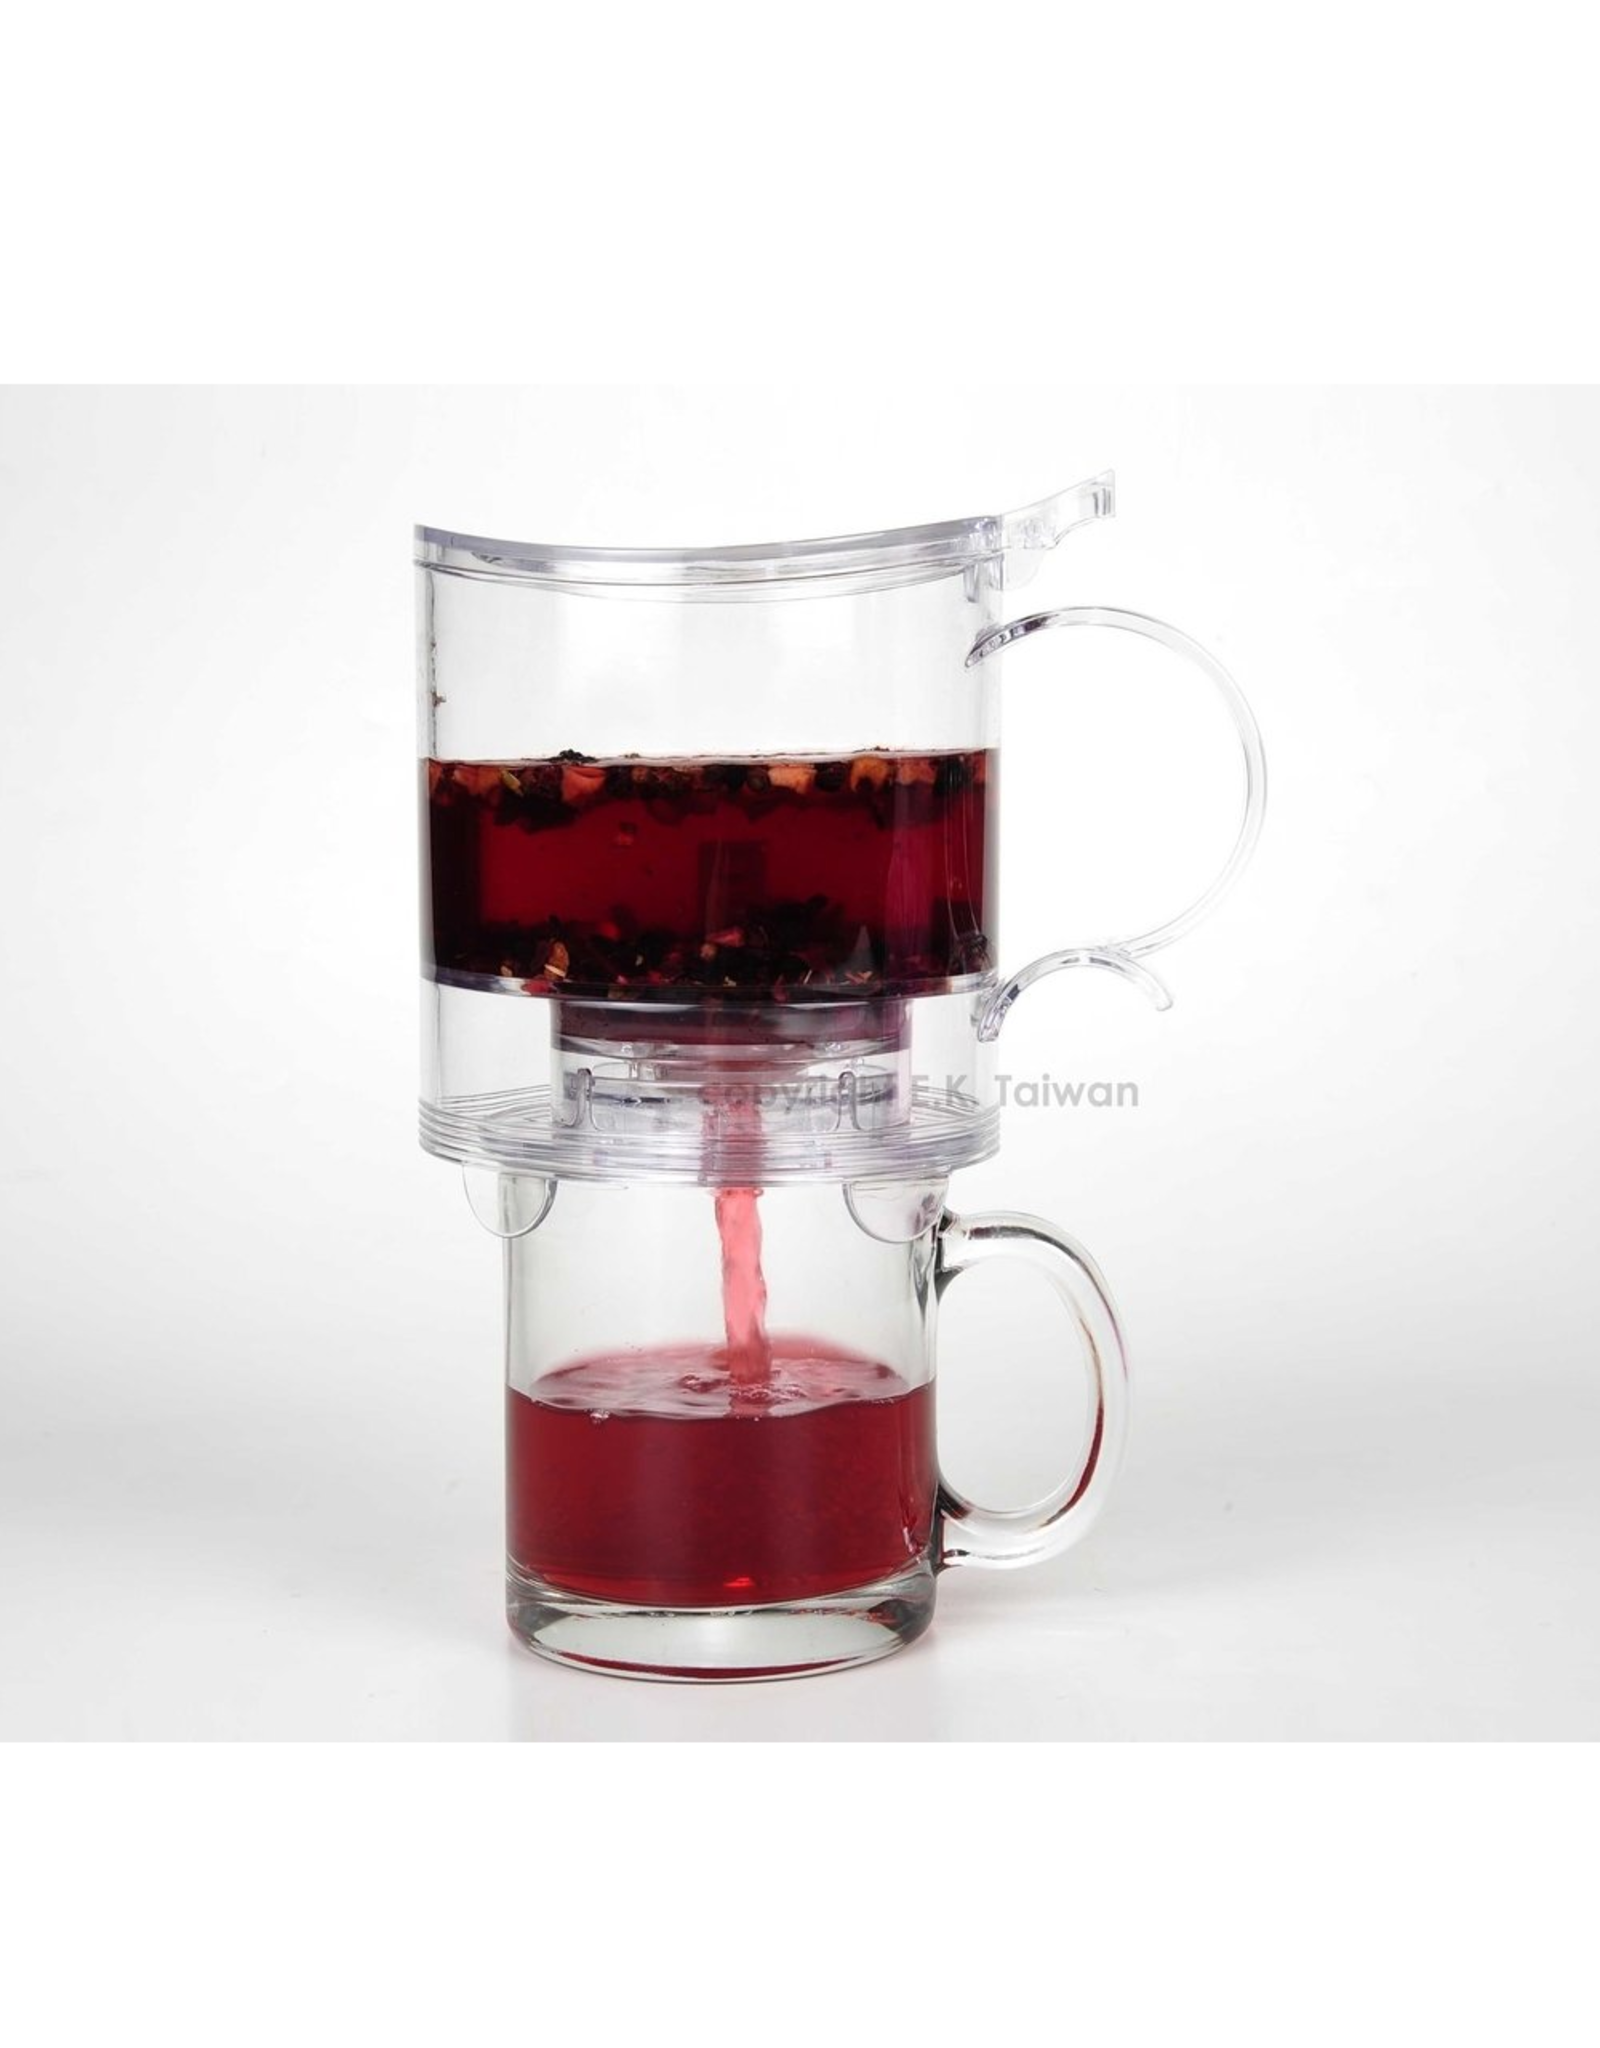 Arelo thee & accessoires Handybrew Tea Maker "Theezetter" 500ml - Arelo